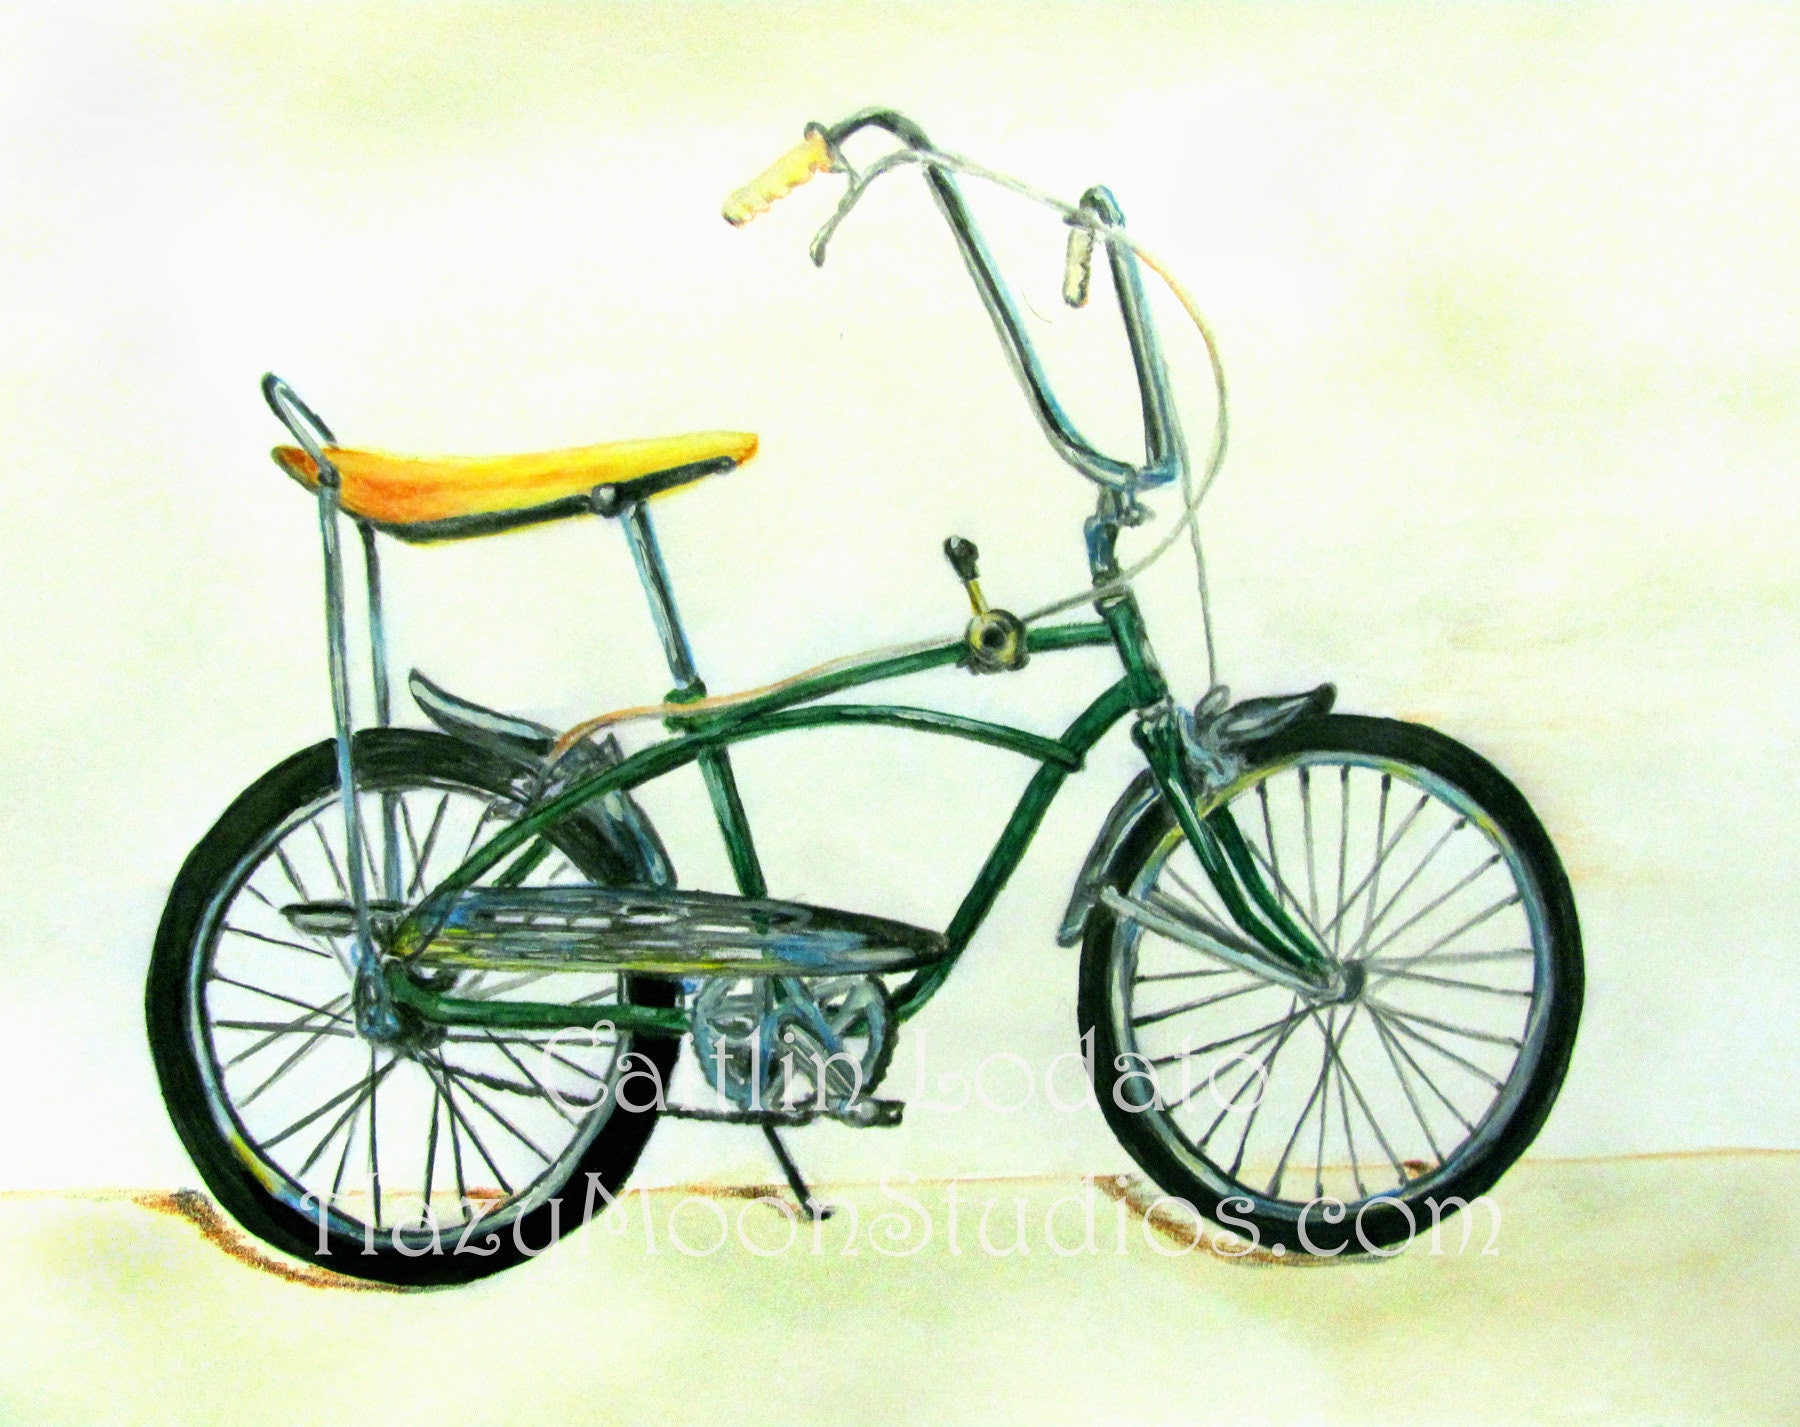 multifunctioneel Kudde oppakken Schwinn Sting-ray Bike Watercolor Print 8x10 Green and Yellow - Etsy